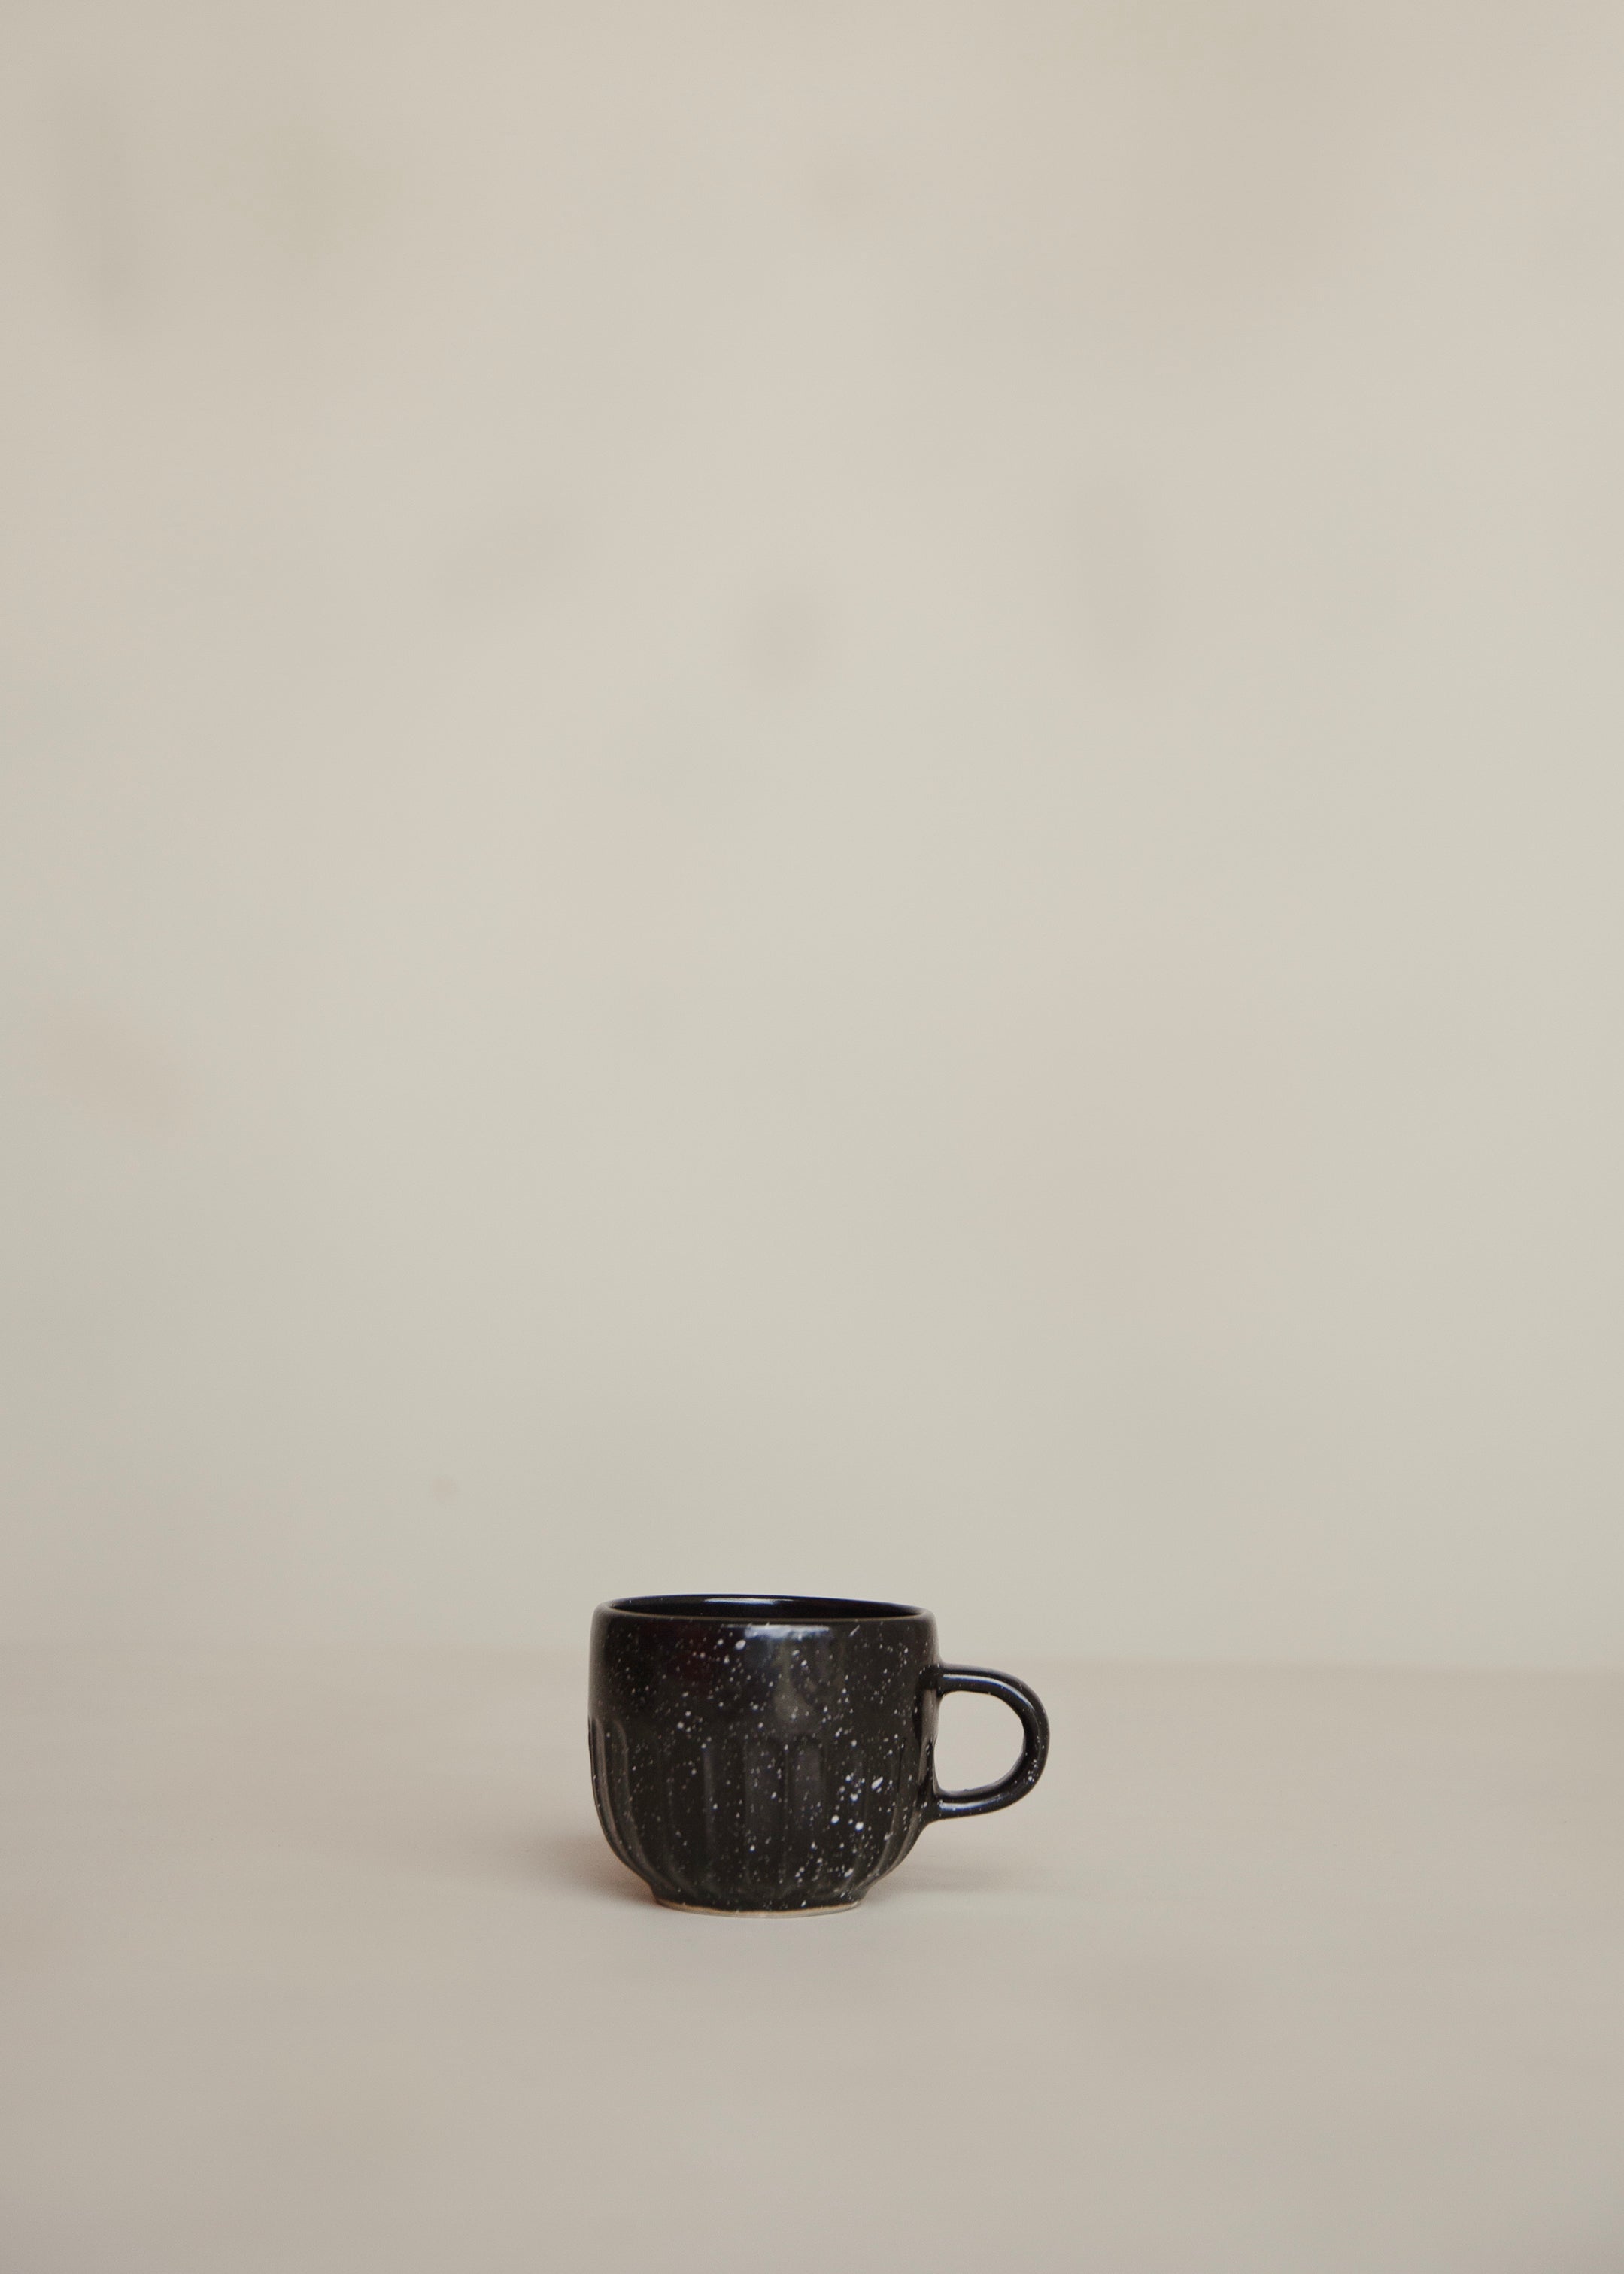 Meru Cup / Speckled Black